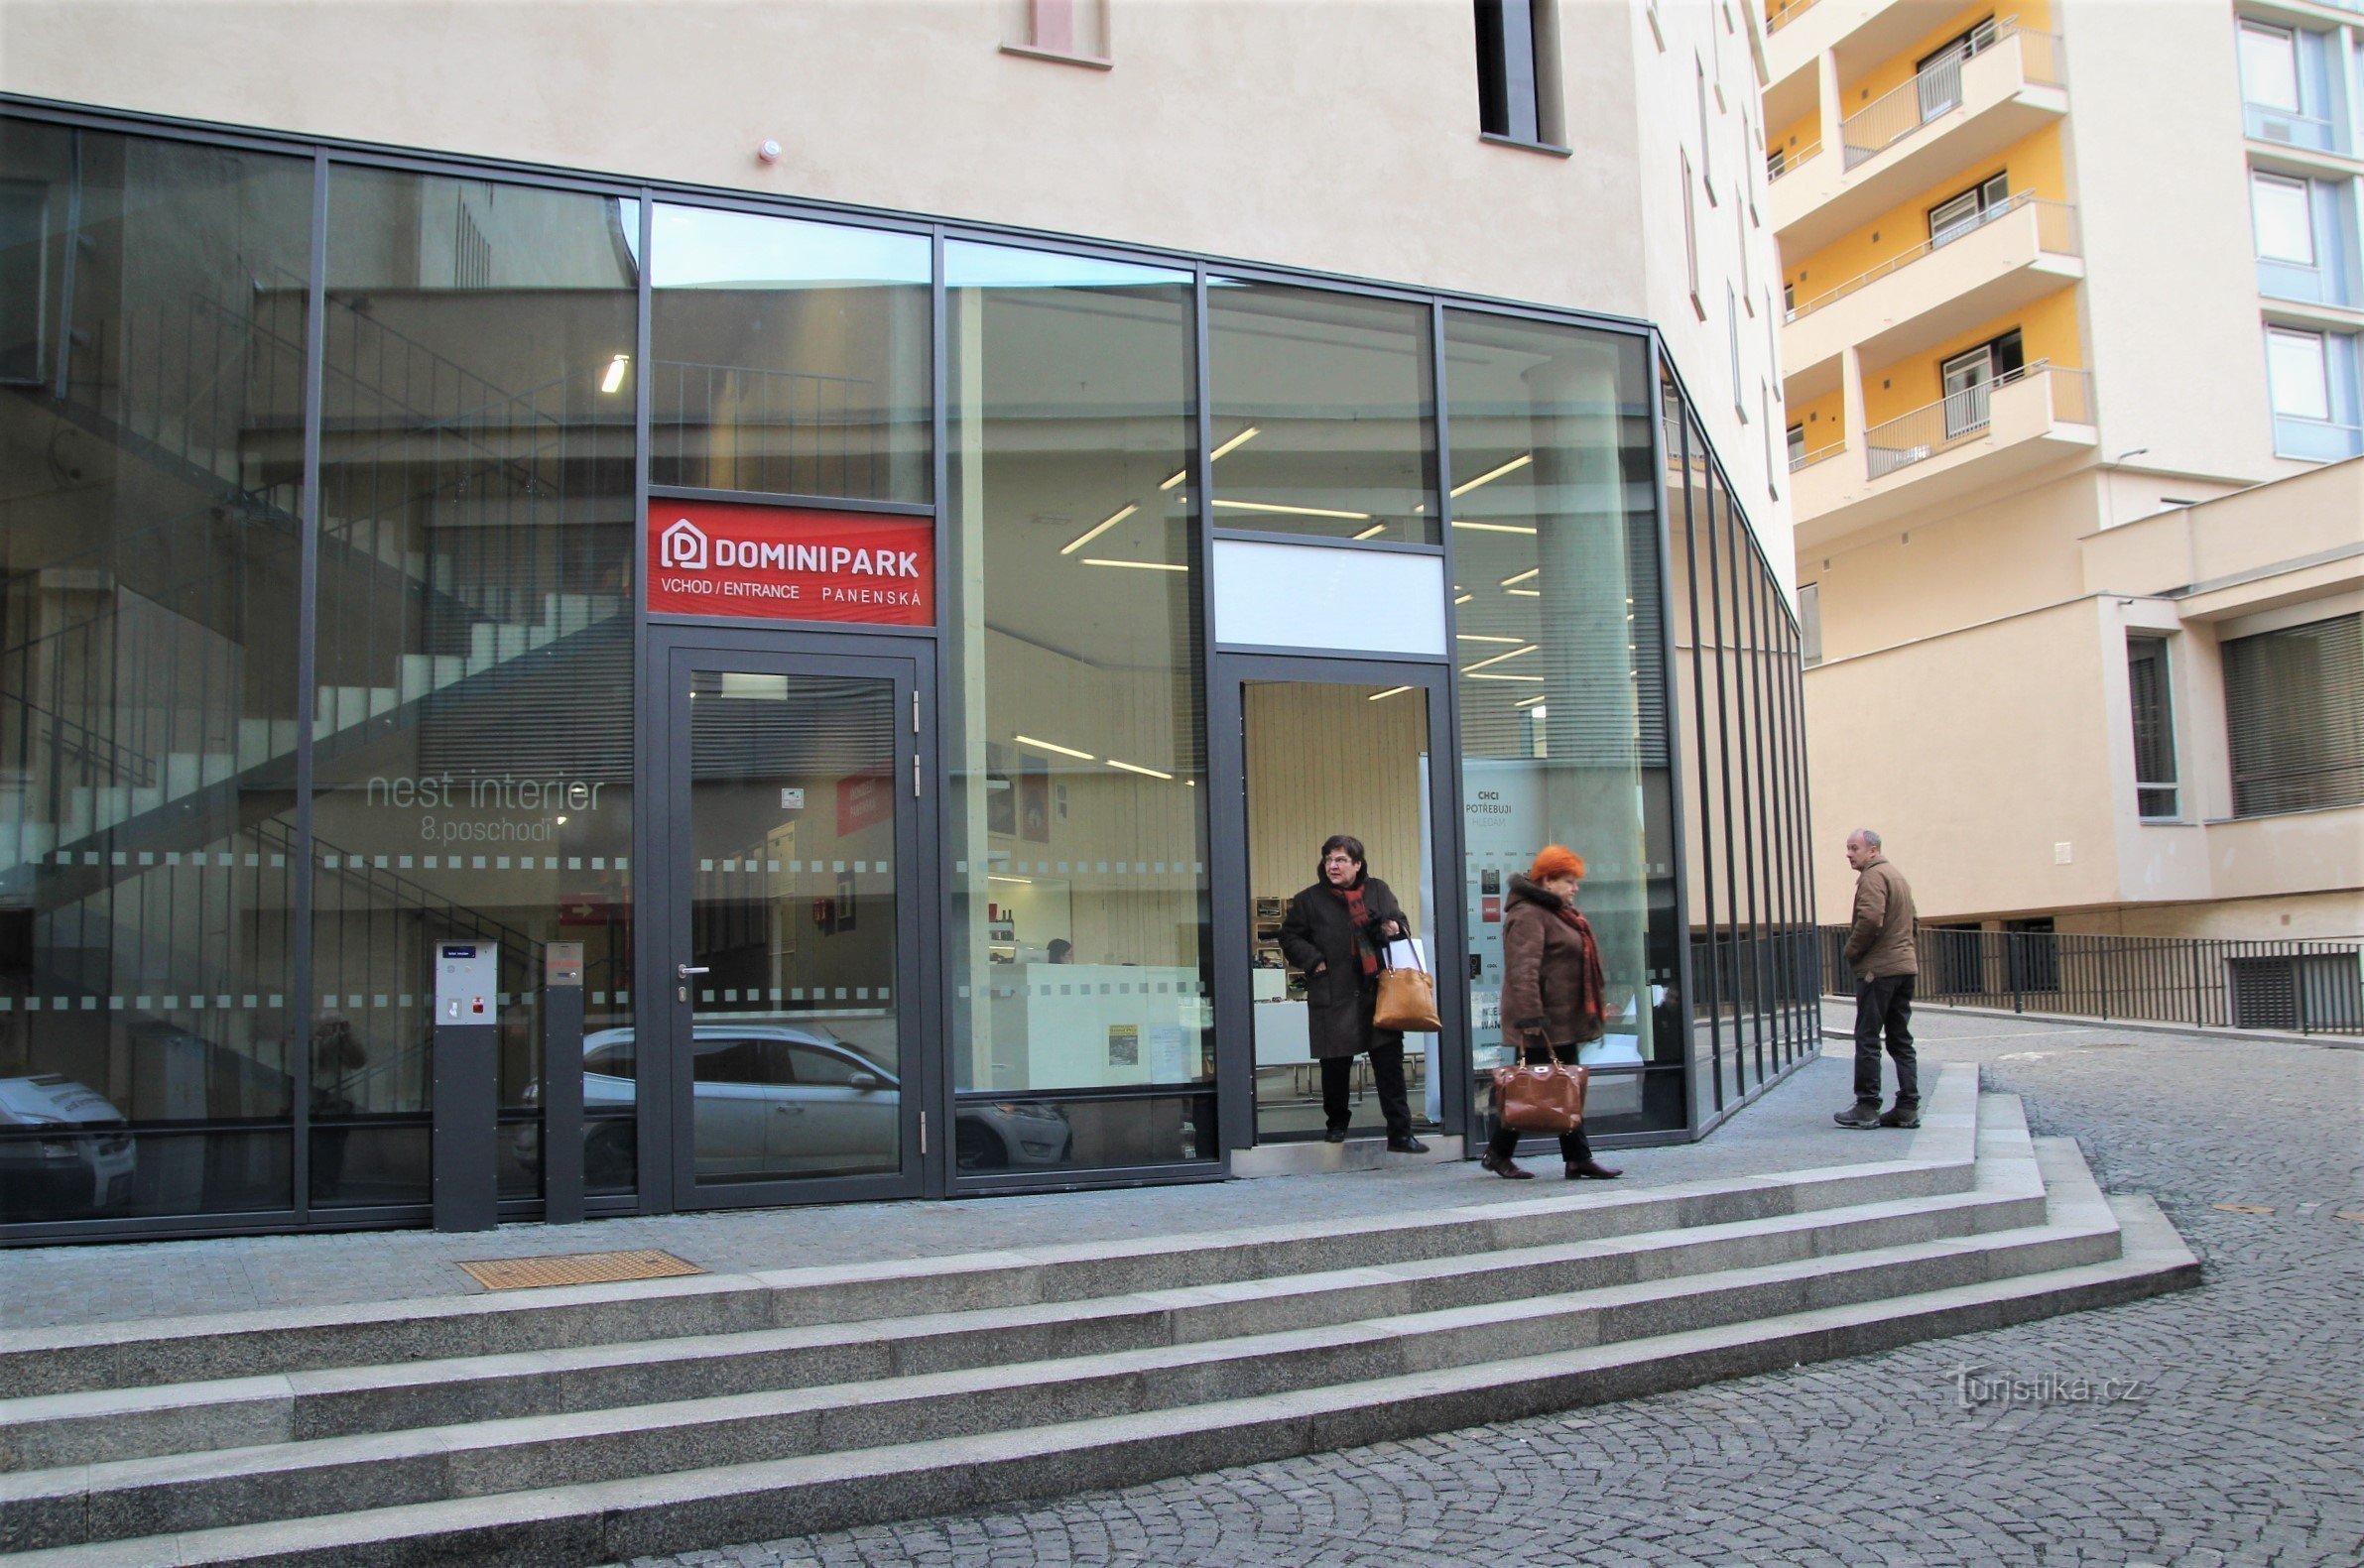 Entrance to the TO JE Brno information center on Panenská street